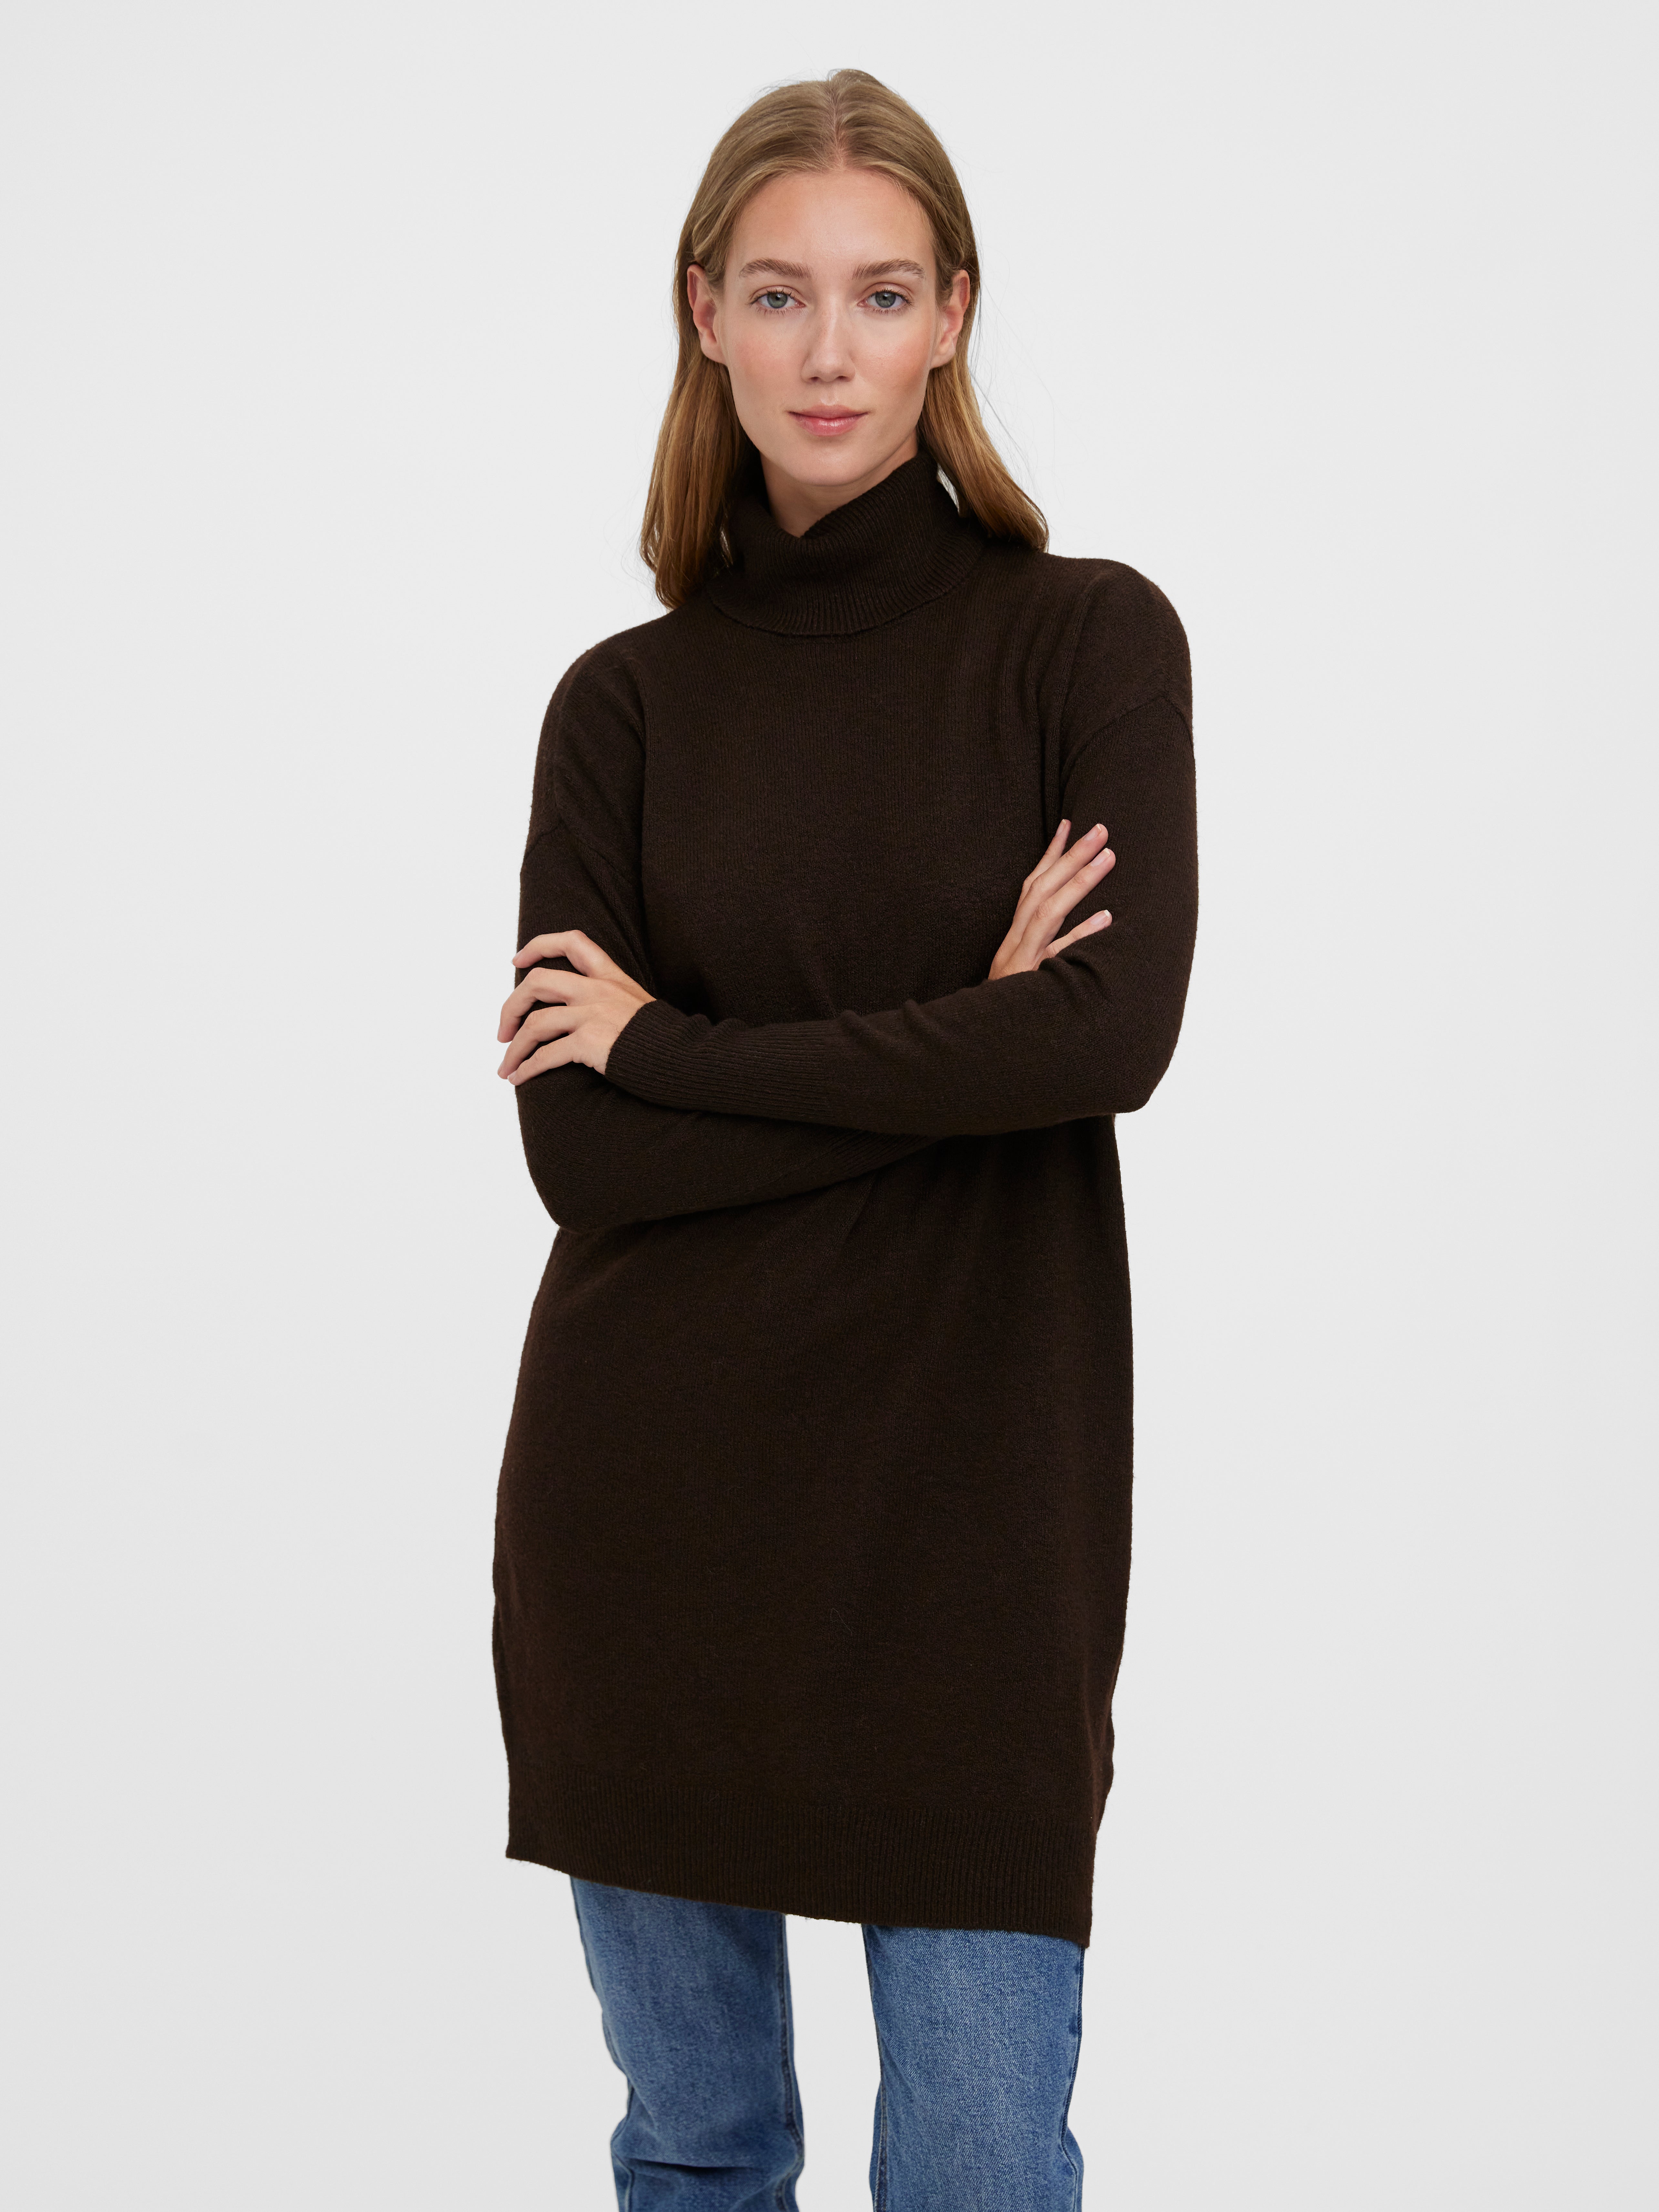 Vero Moda Sweaterjurk lichtgrijs-zwart gestippeld casual uitstraling Mode Jurken Sweaterjurken 